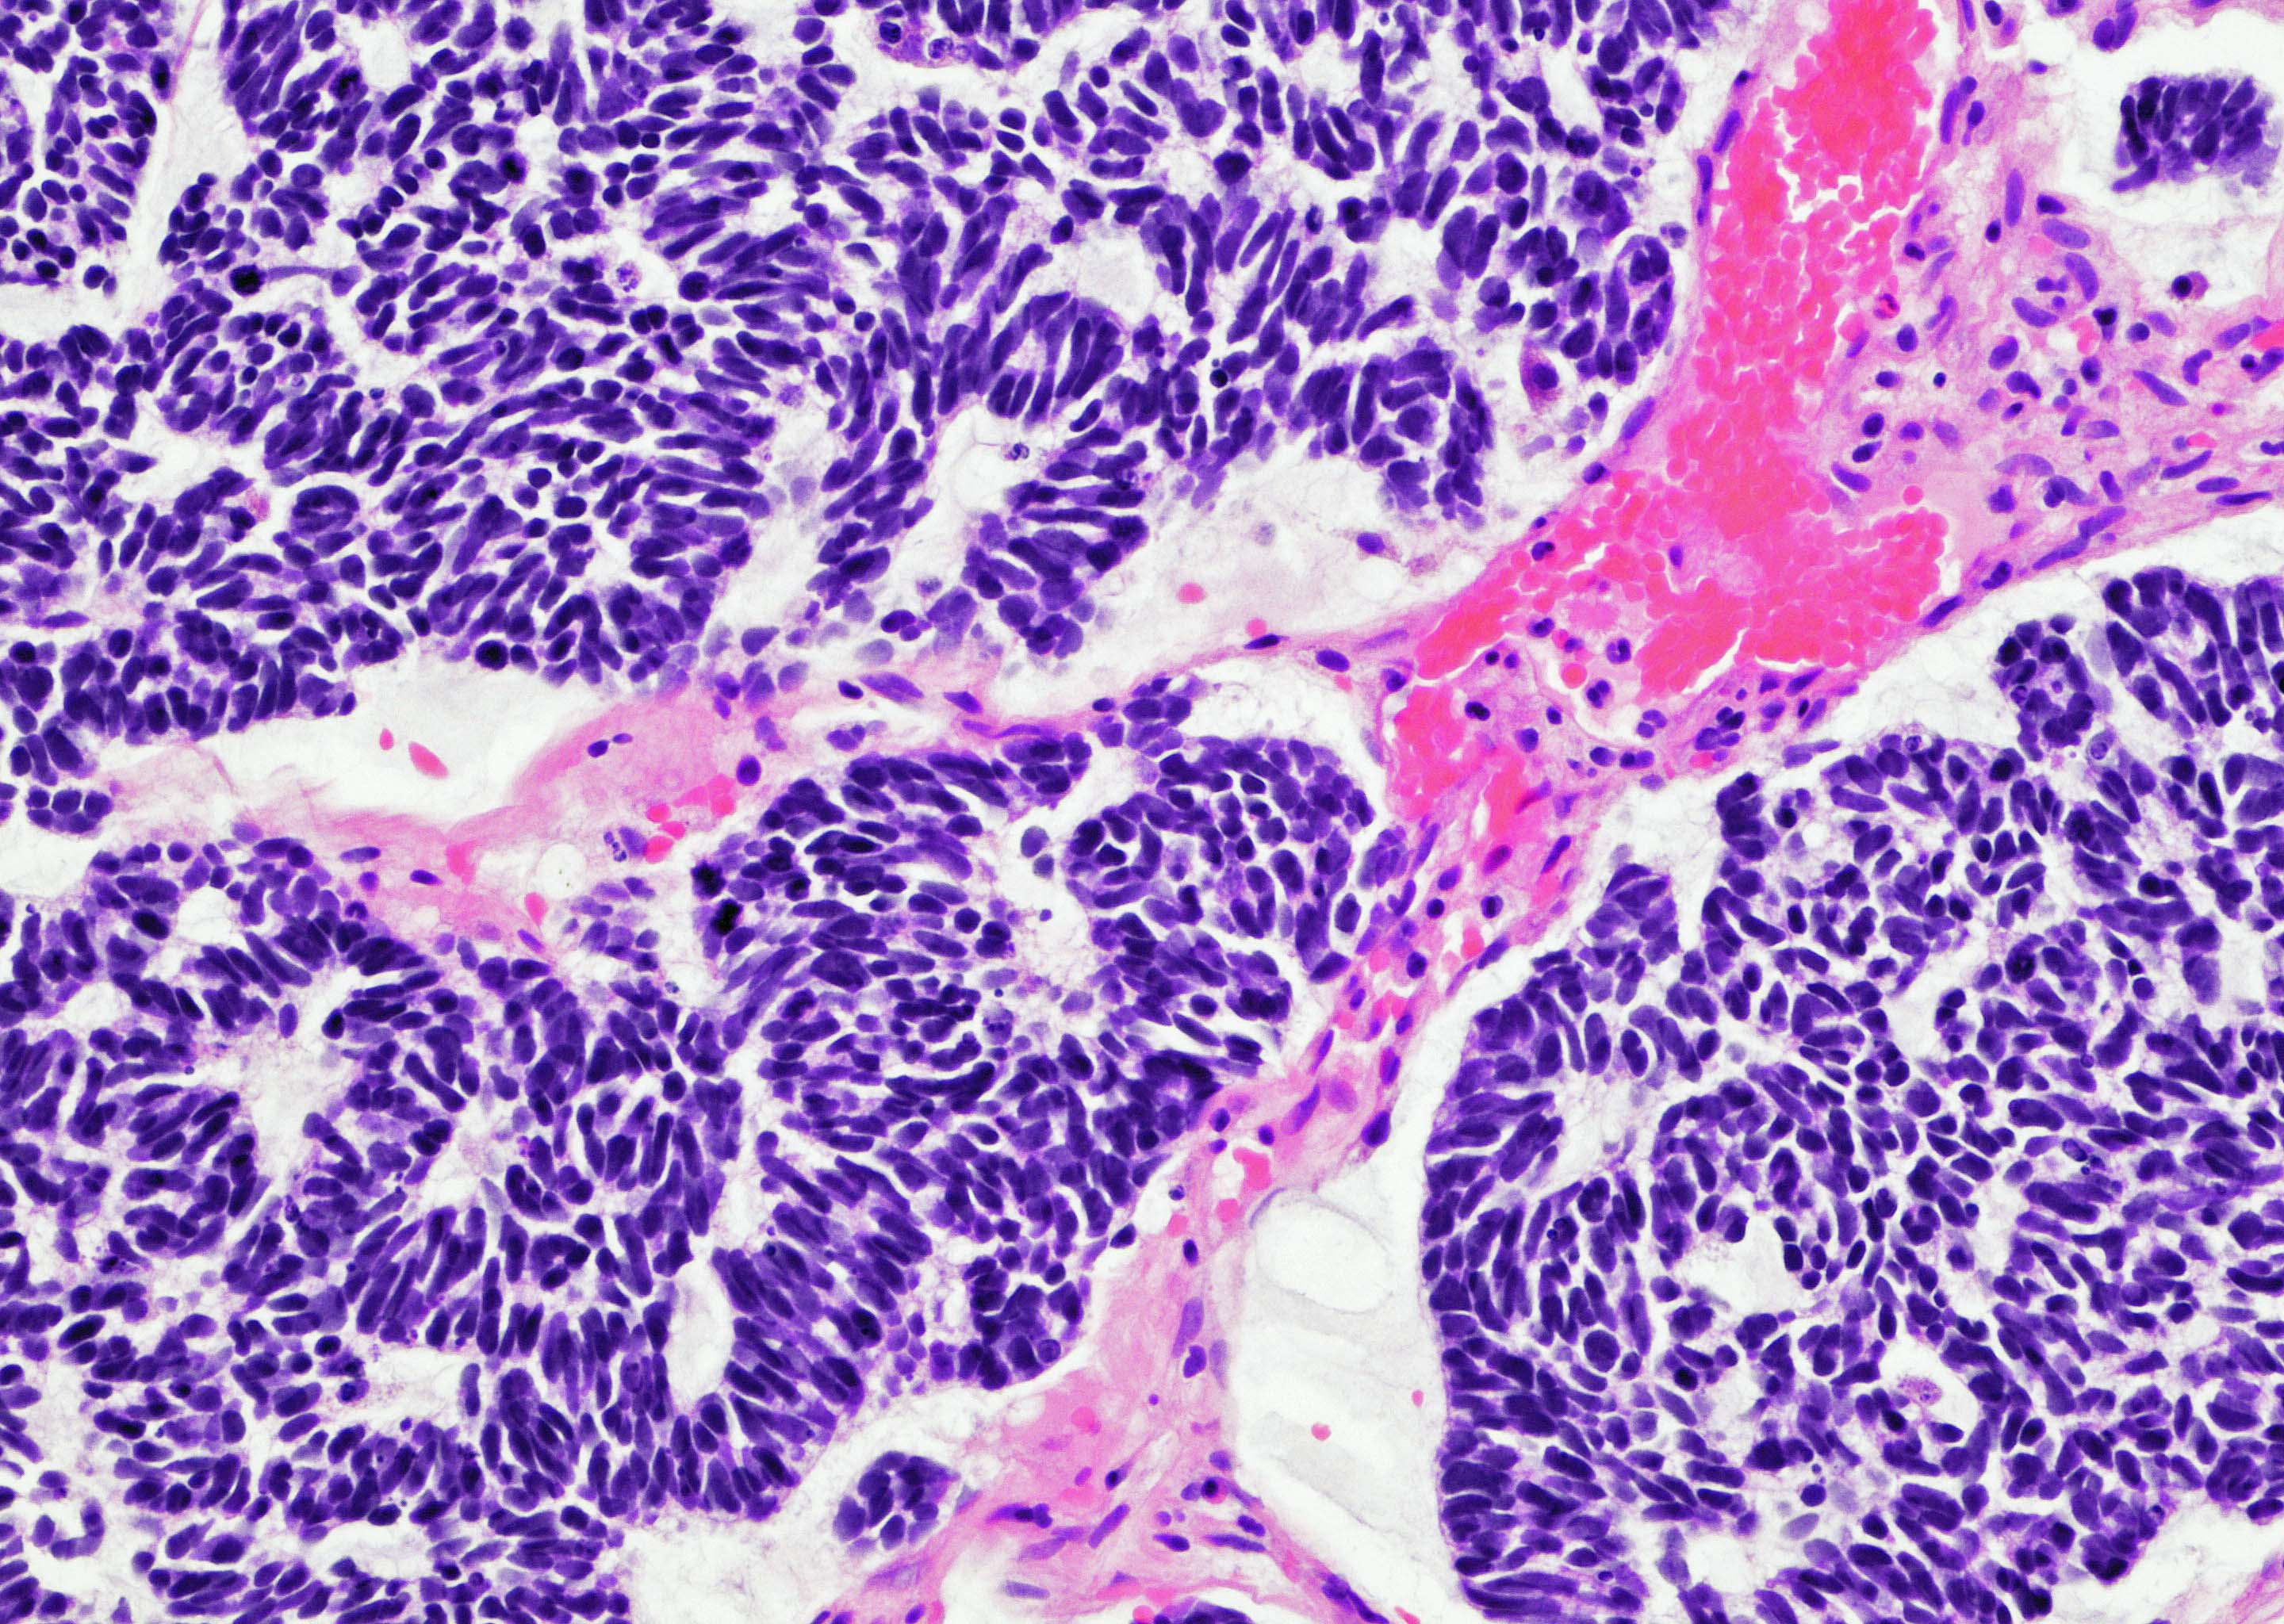 Bladder small cell neuroendocrine carcinoma